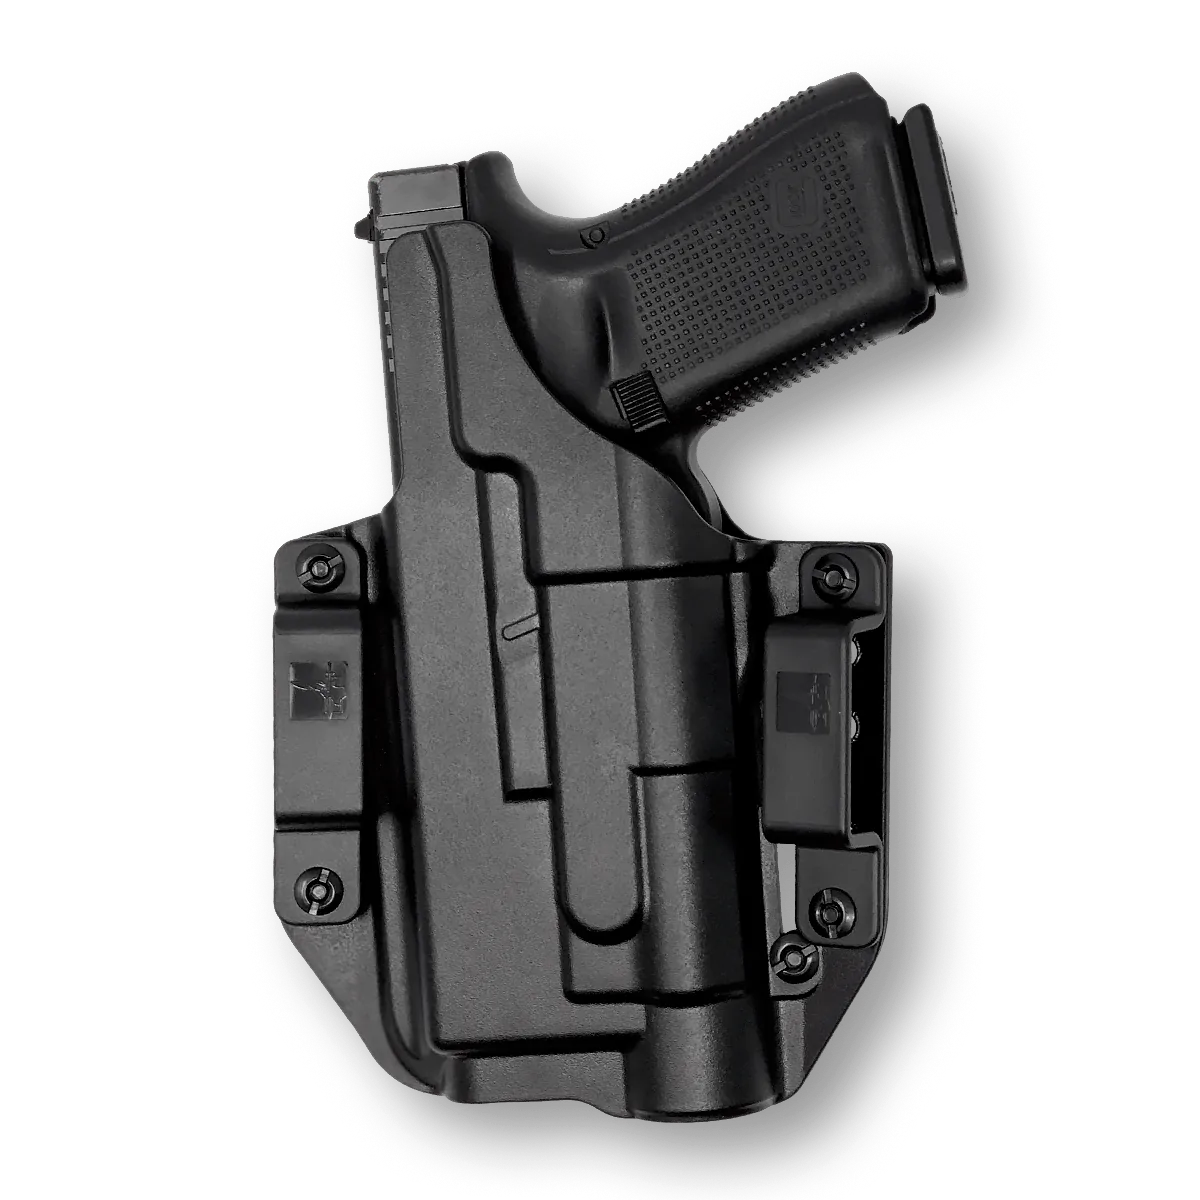 Bravo OWB (Outside Waistband) Right Handed Light Bearing Holster Glock 17,19,22,23,31,32 w/TLR 1 HL (BC30-1004)